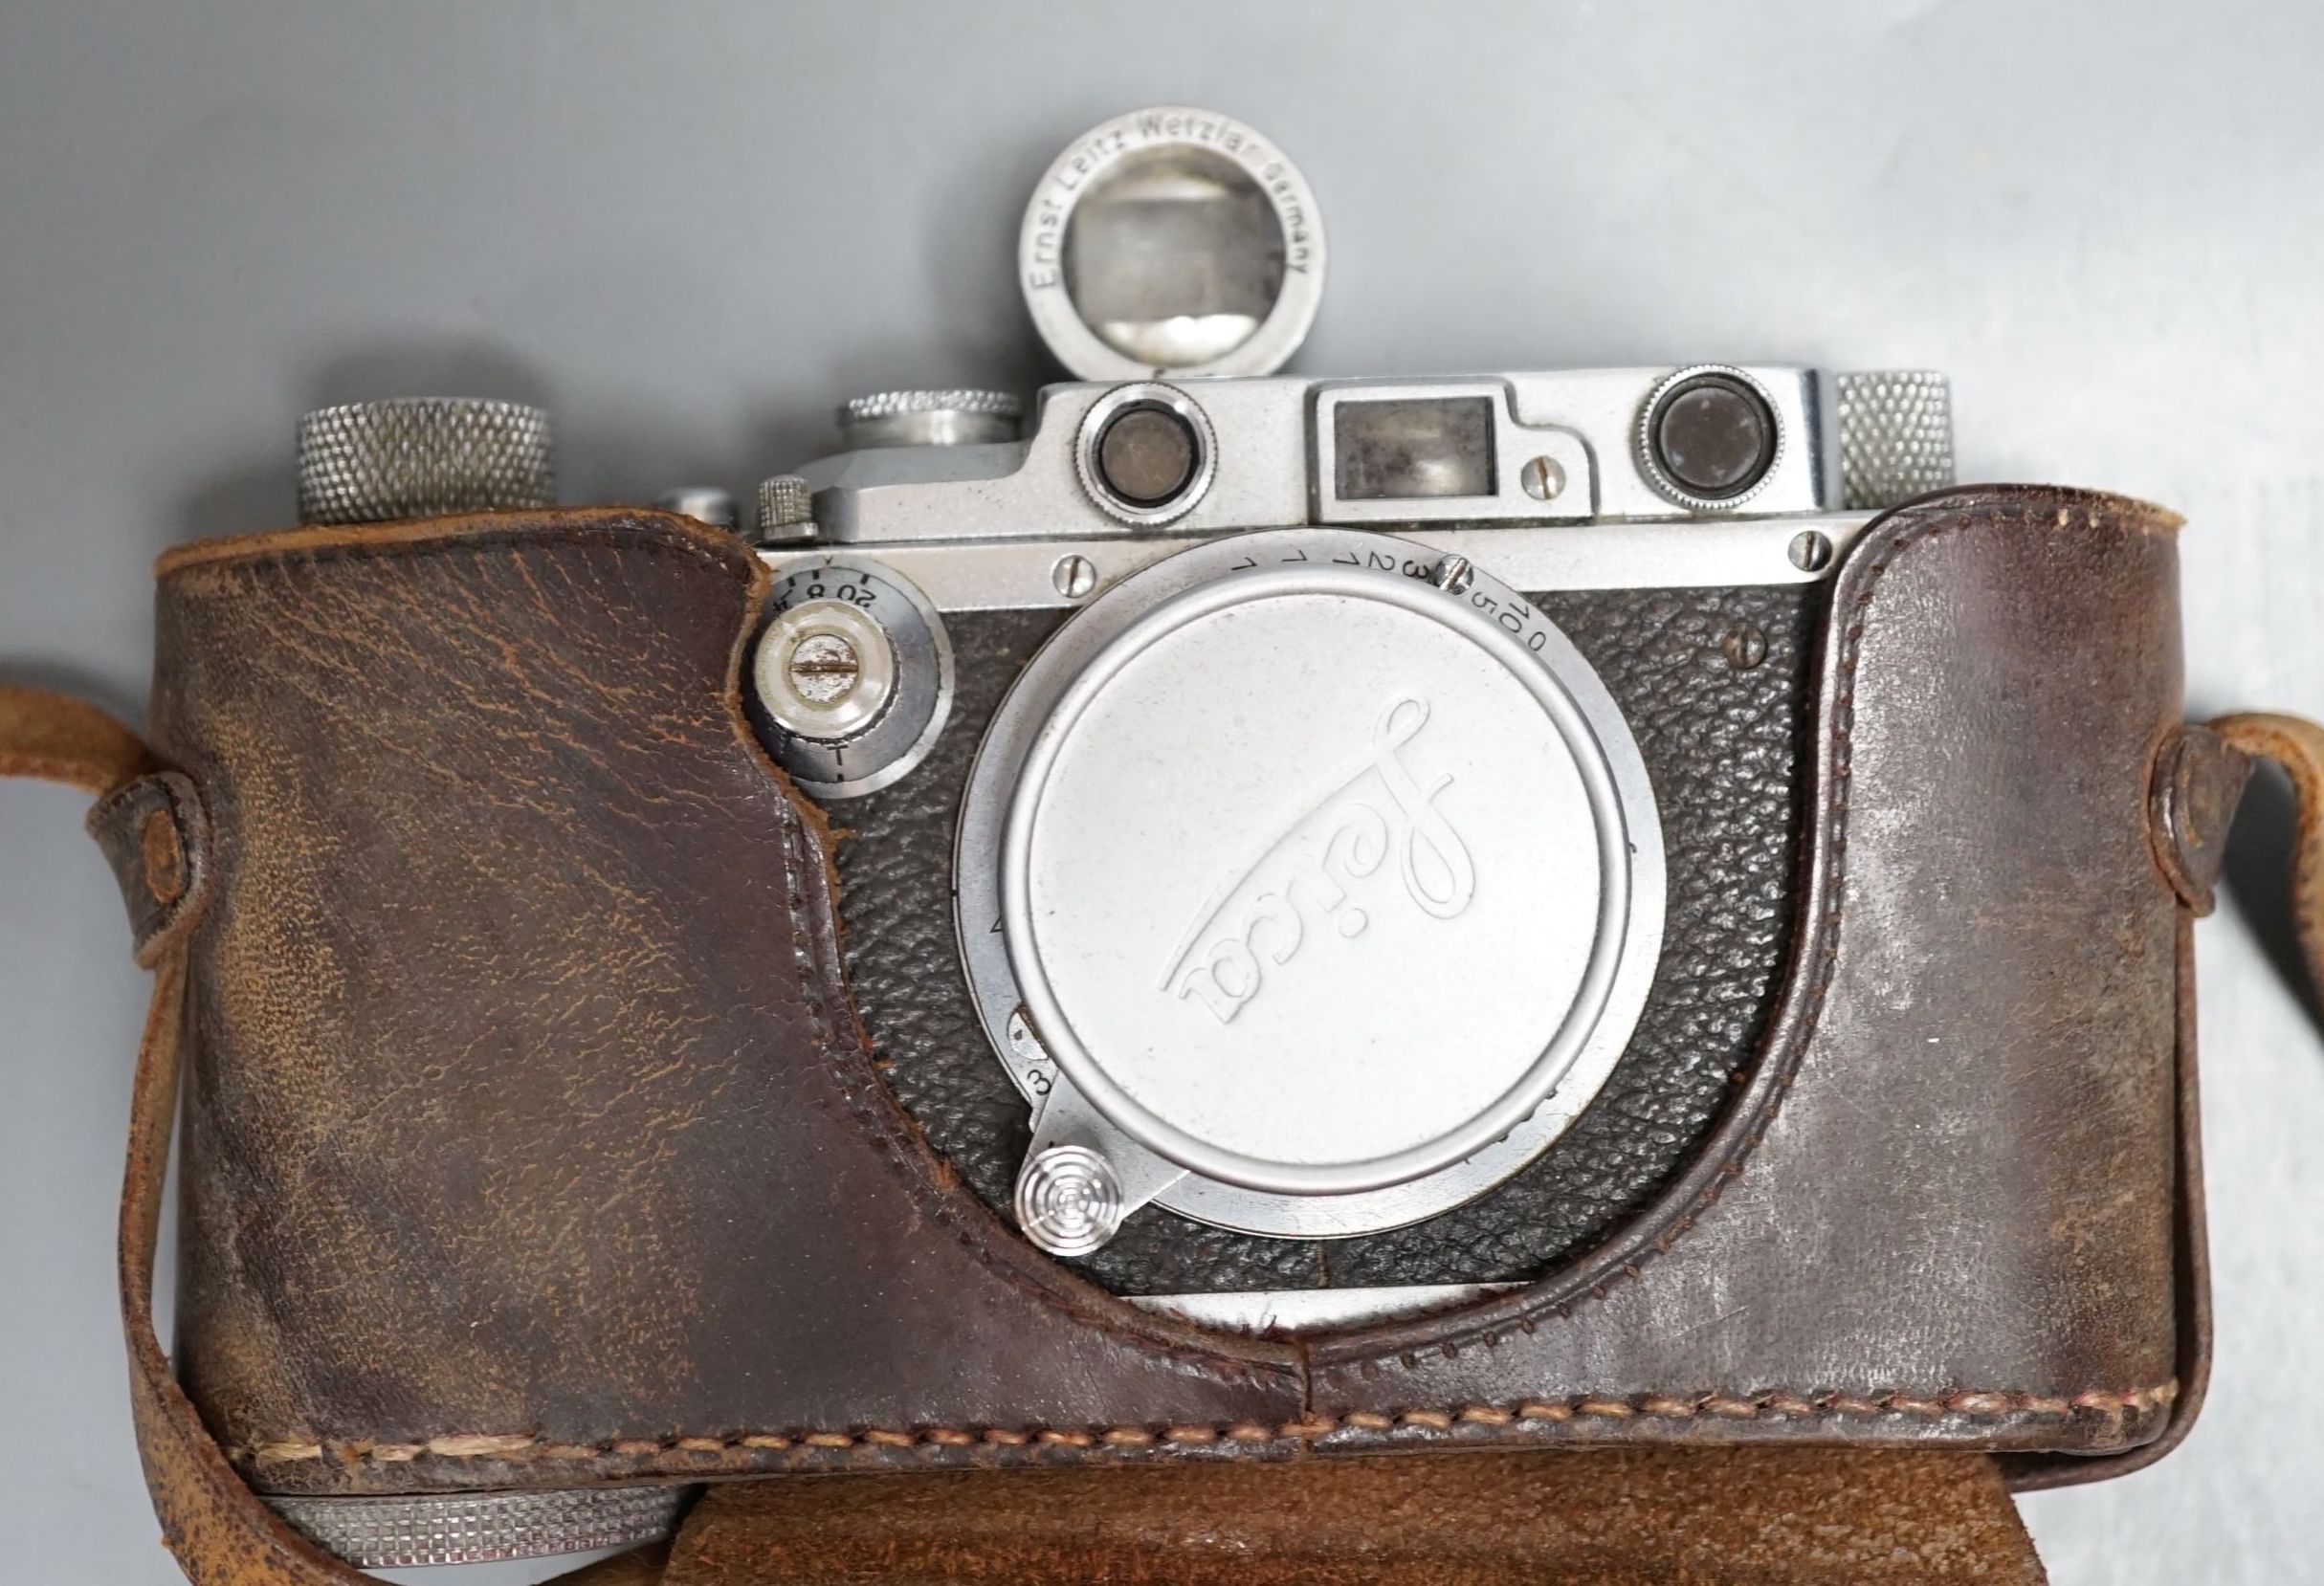 A Leica Model III/IIIA camera, c.1930, no.136412, in leather case